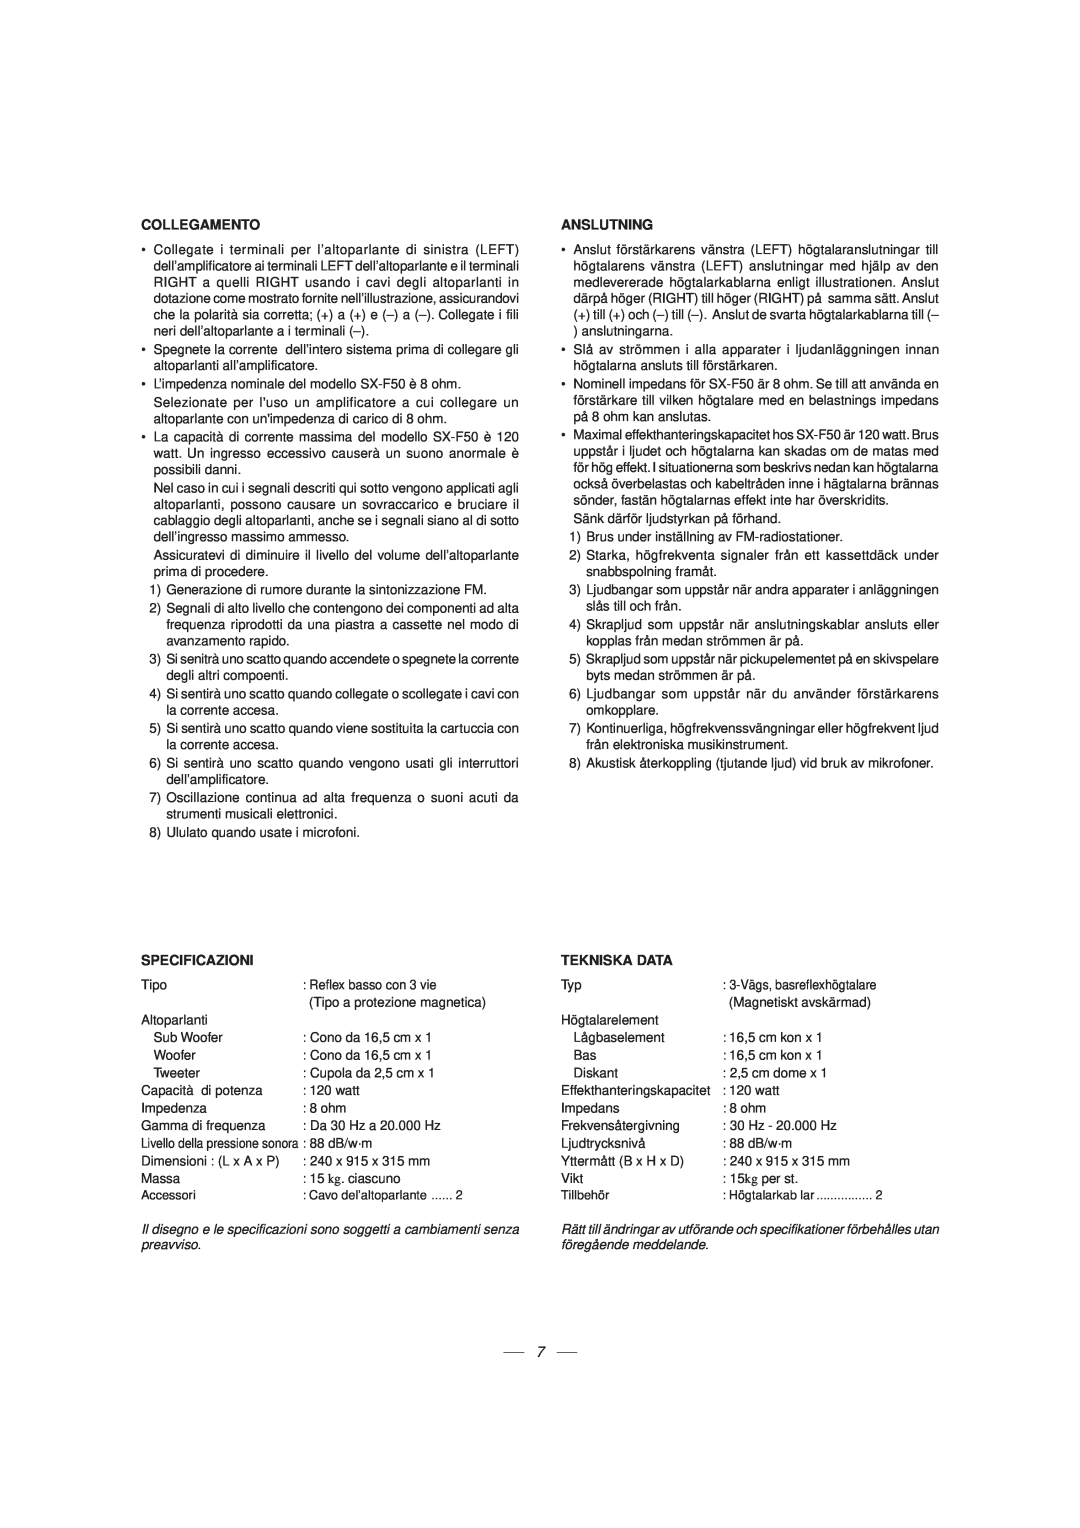 JVC SX-F50, LVT0347-001A manual Collegamento, Anslutning, Specificazioni, Tekniska Data 